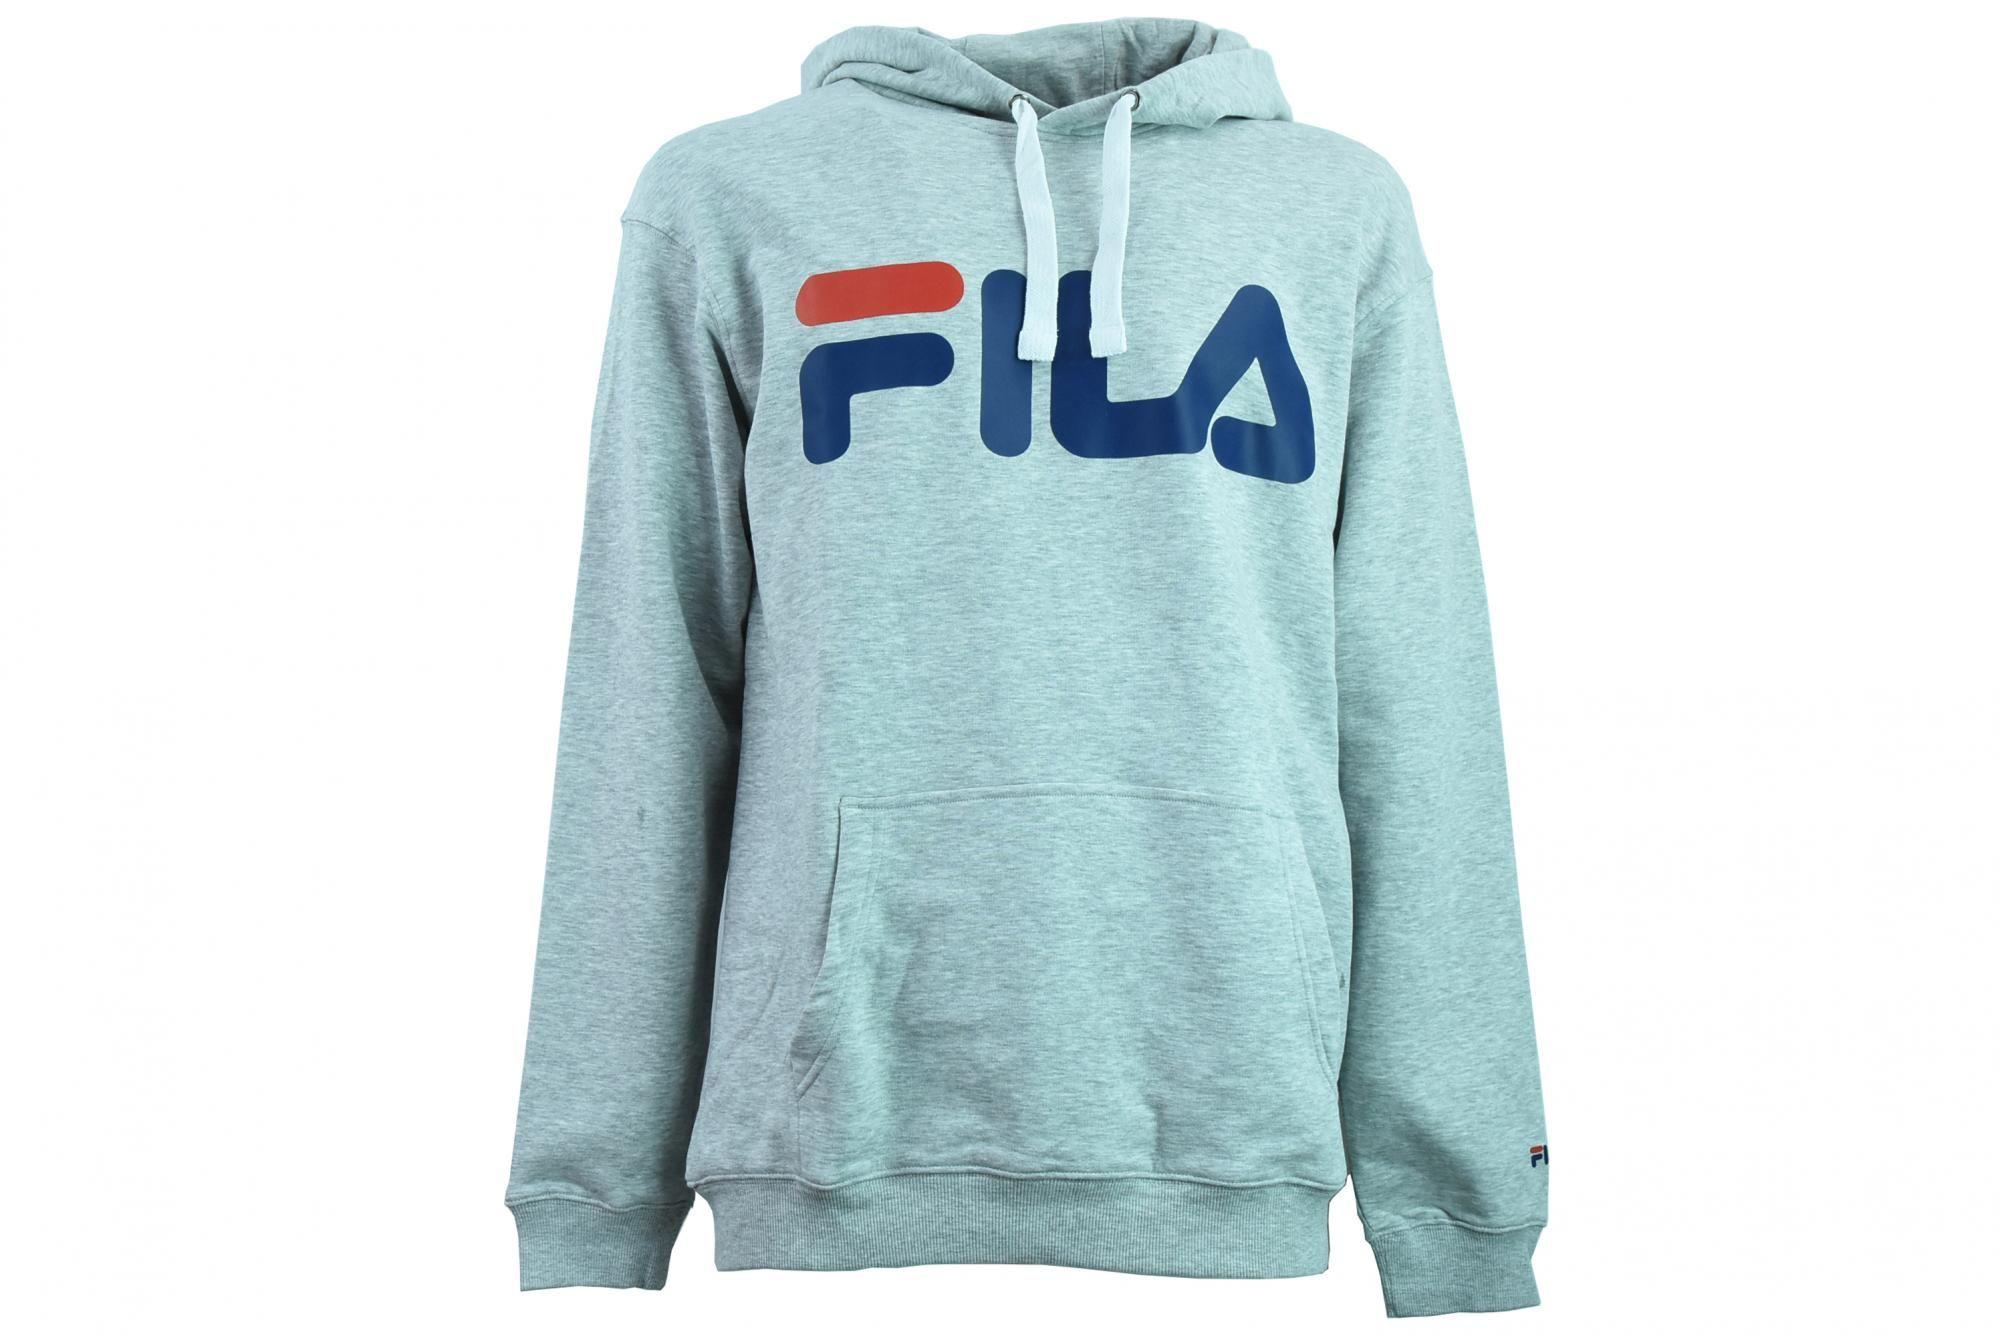 Hood Clothing Logo - Fila A18u unisex clothing hooded sweatshirt 681462 B13 CLASSIC LOGO ...